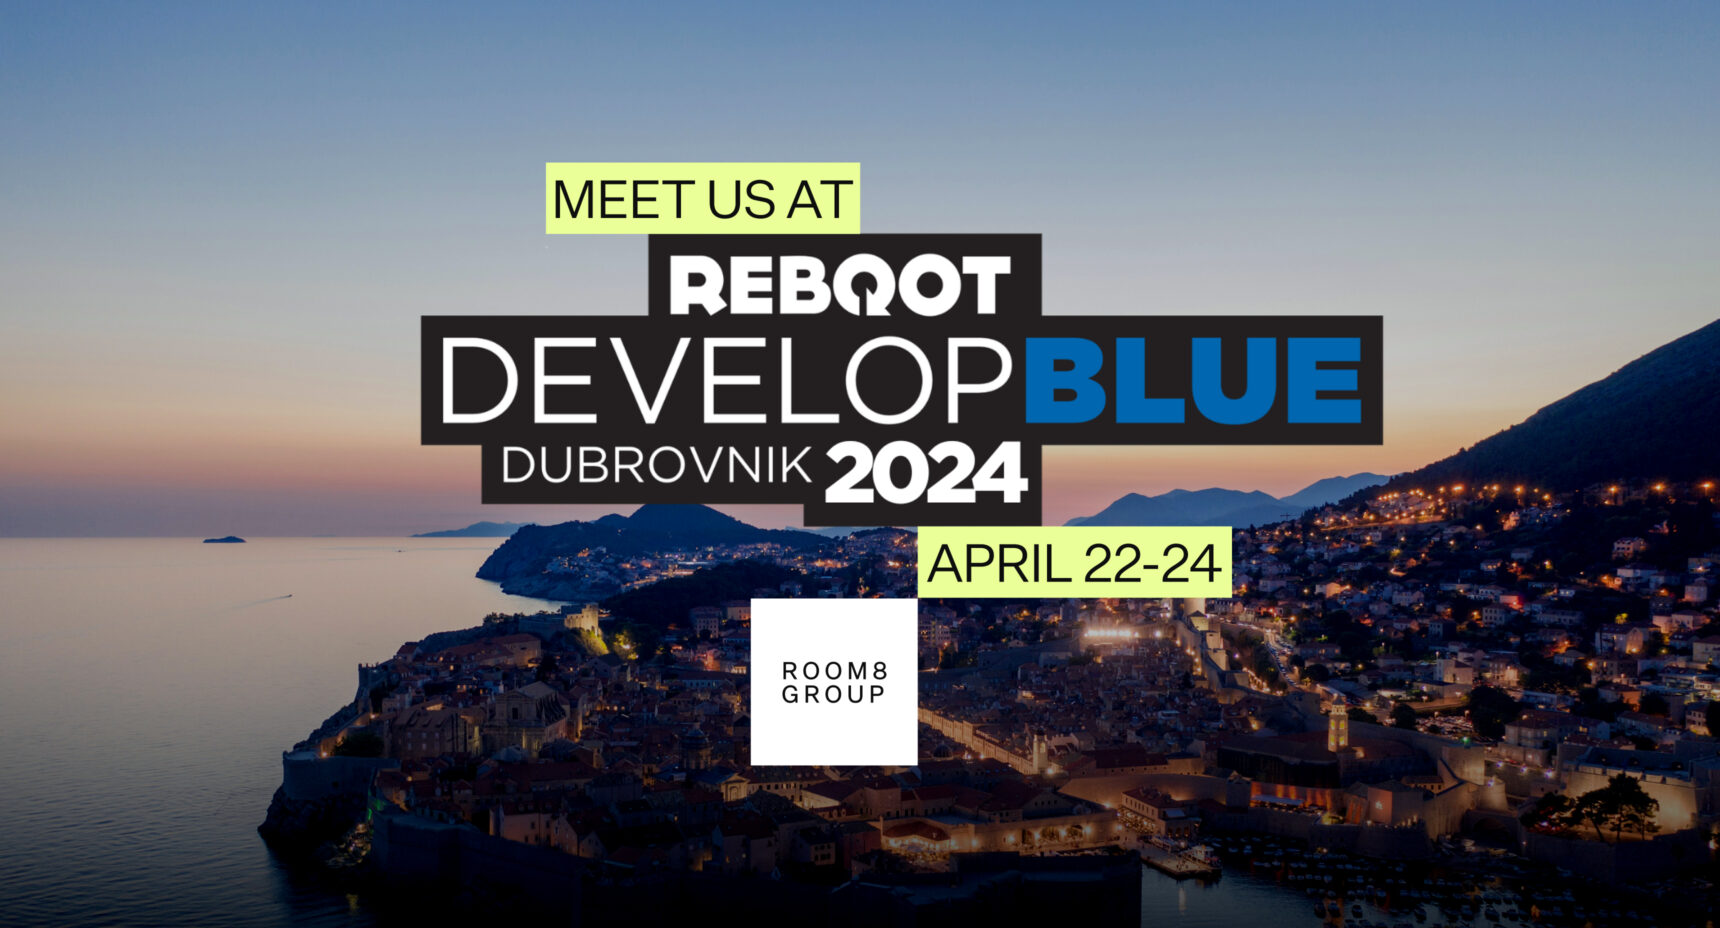 Meet Room 8 Group’s Team at Reboot Develop Blue 2024